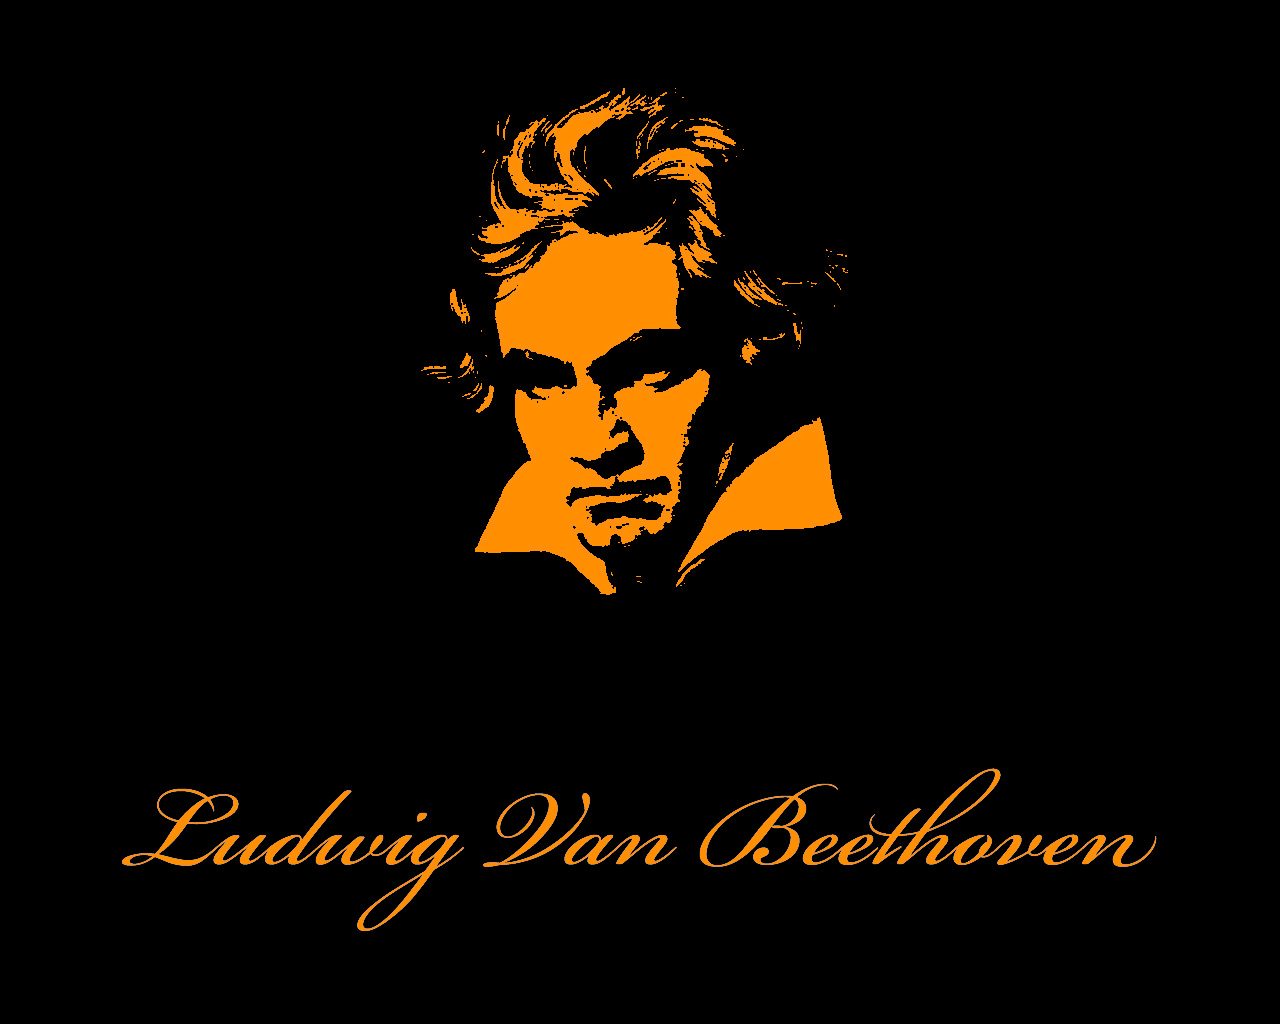 Beethoven By Nc2u